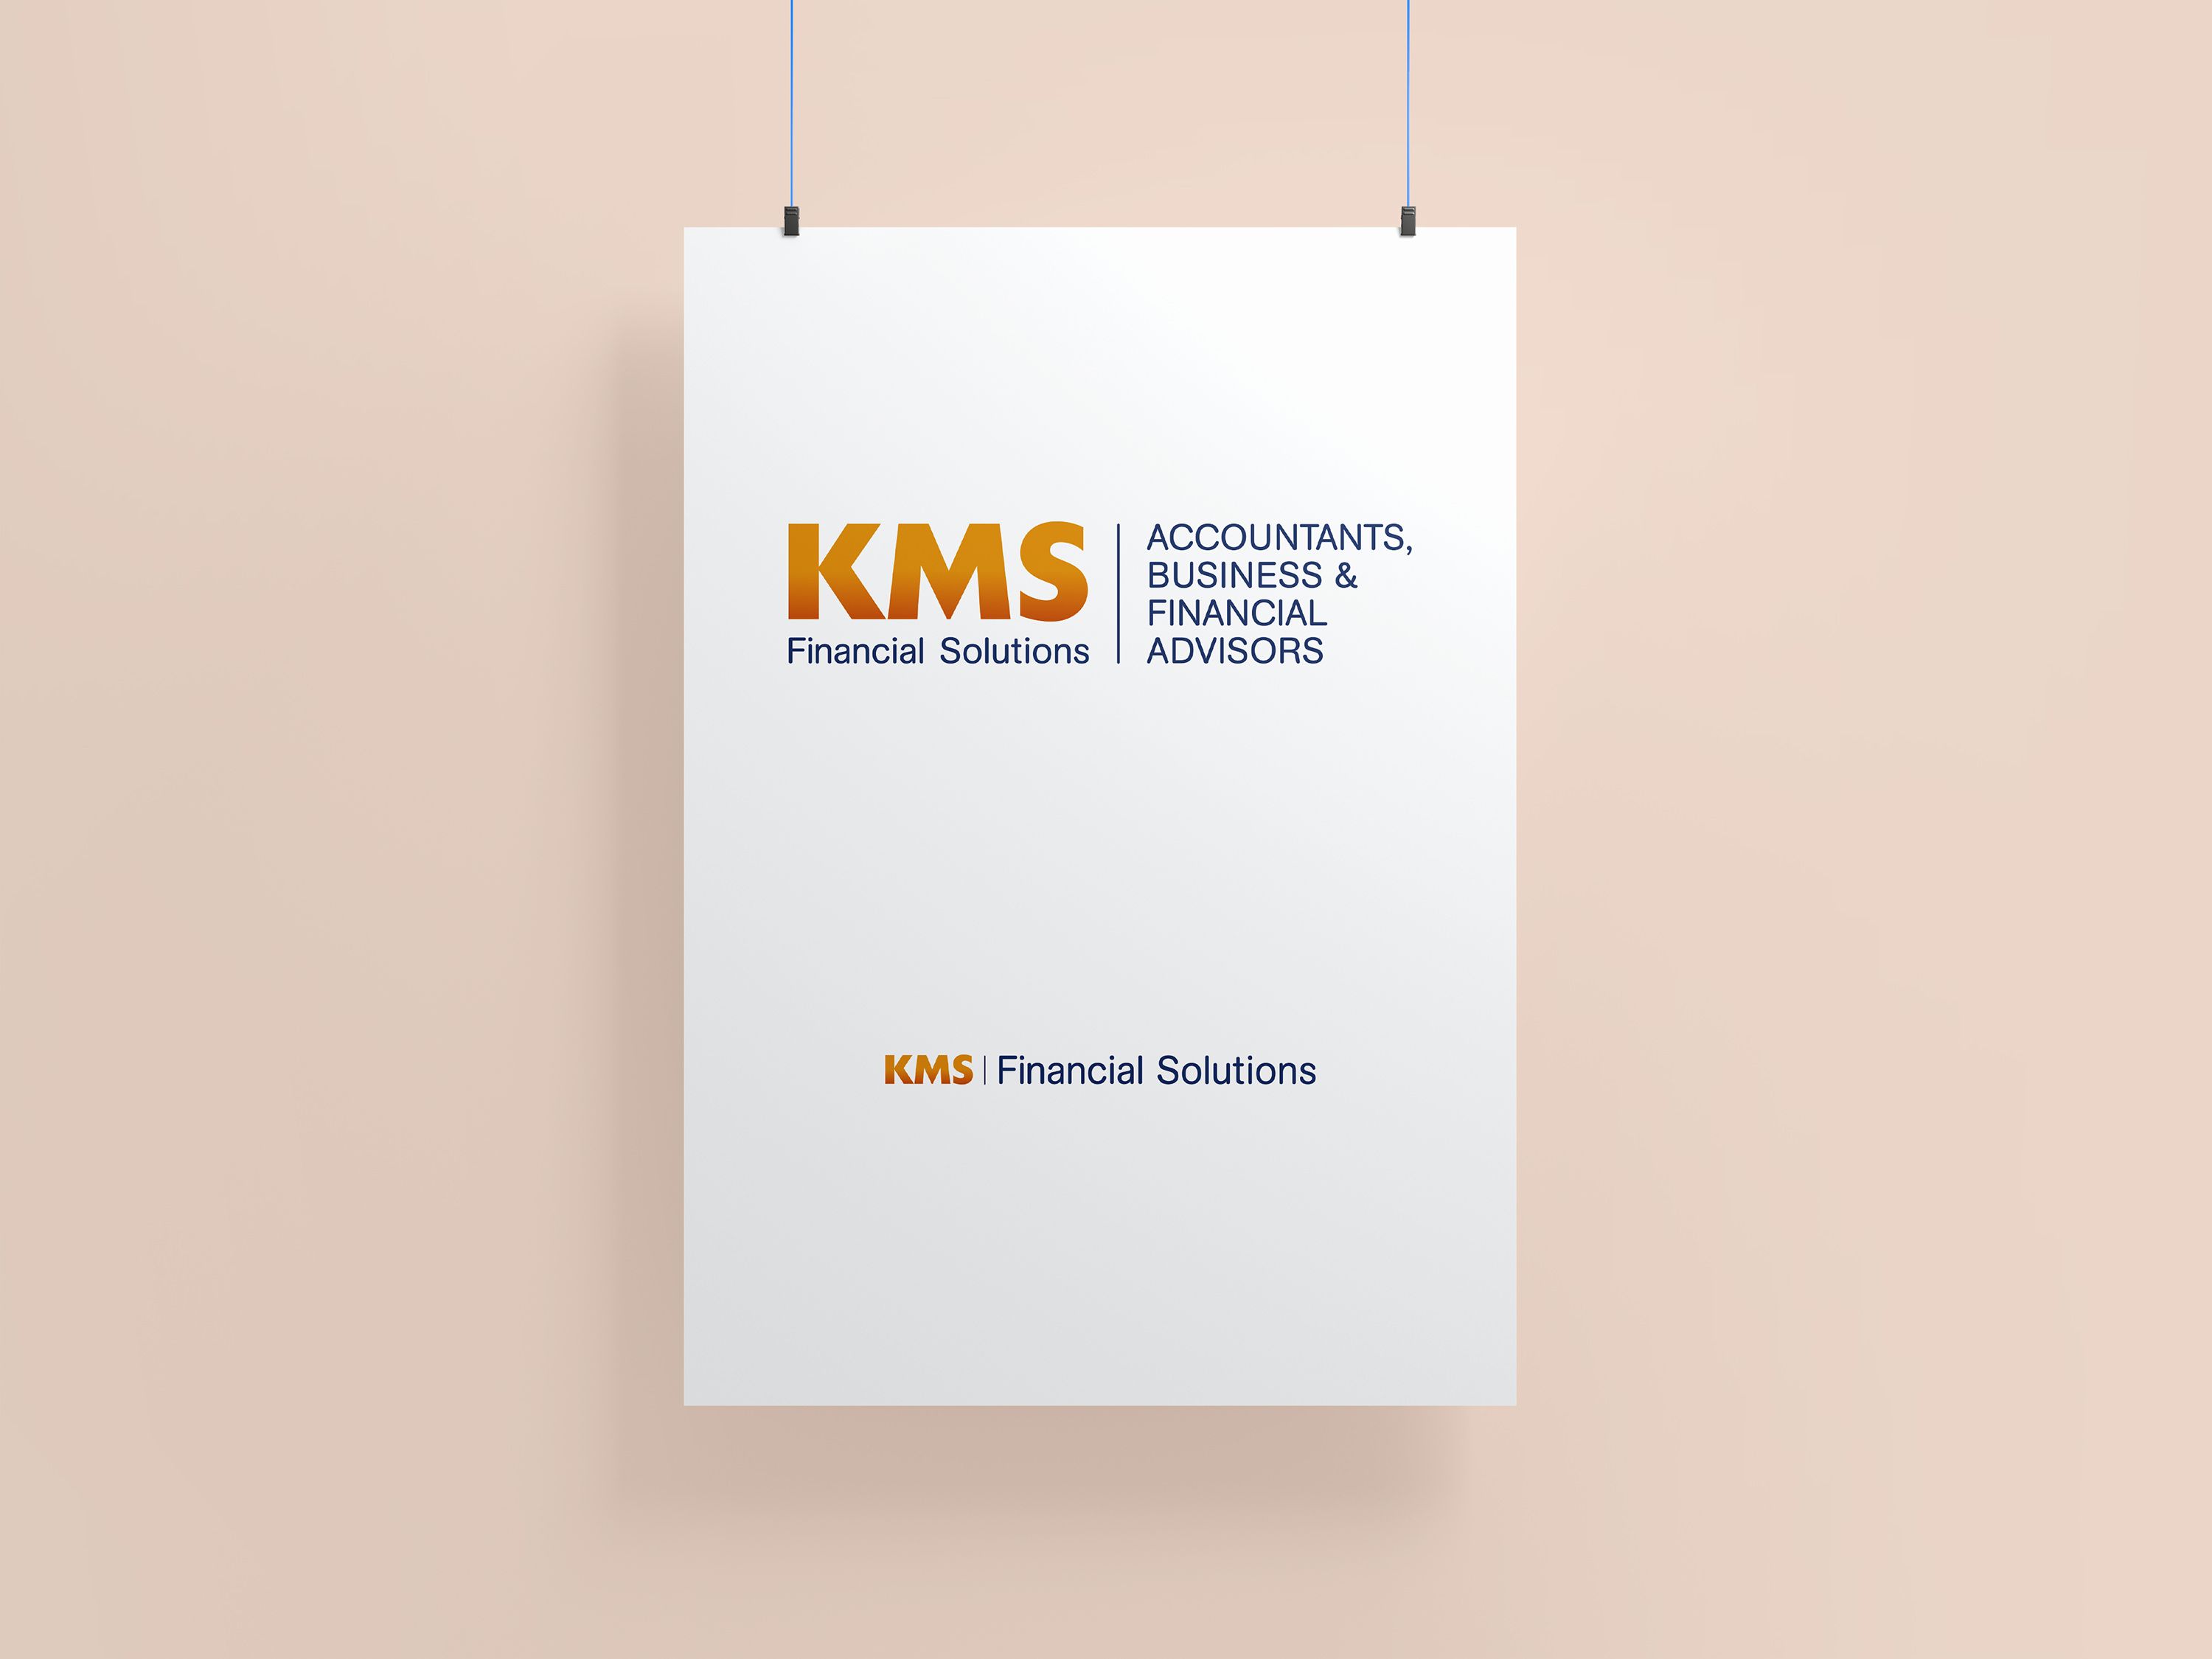 KMS-Financial-Solutions colour logo version